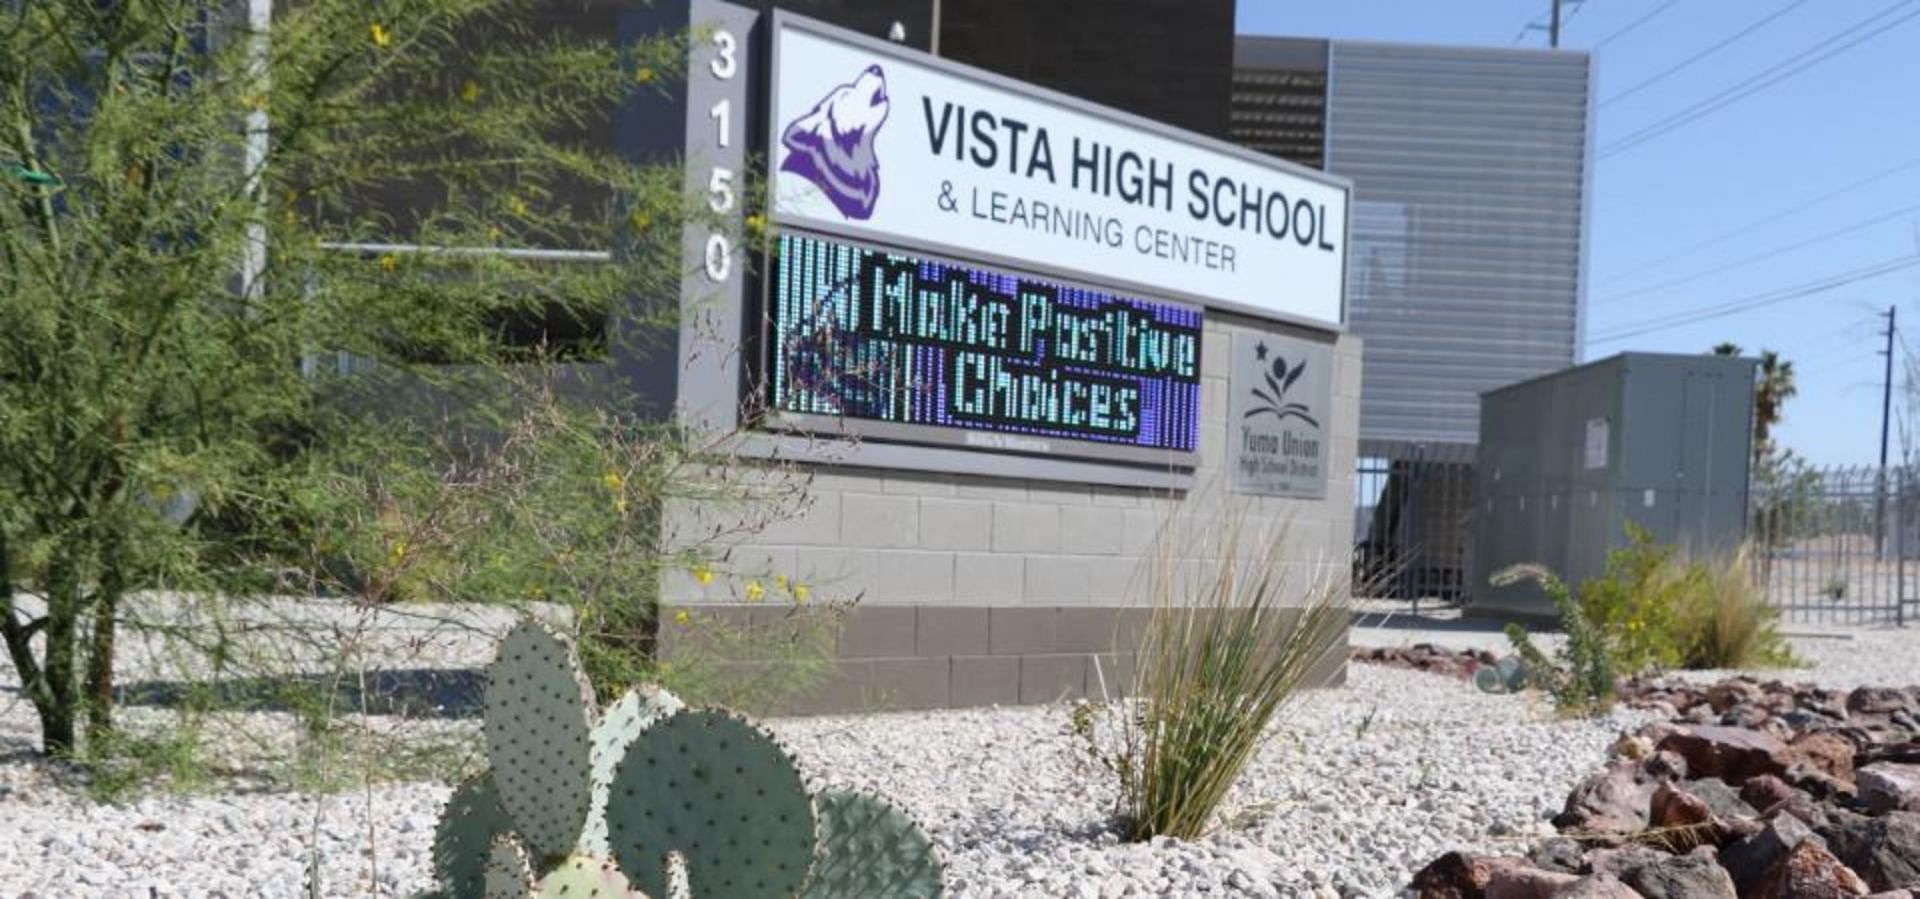 Students and parents protest against Vista High School hazing incident (Image via Vista High School)